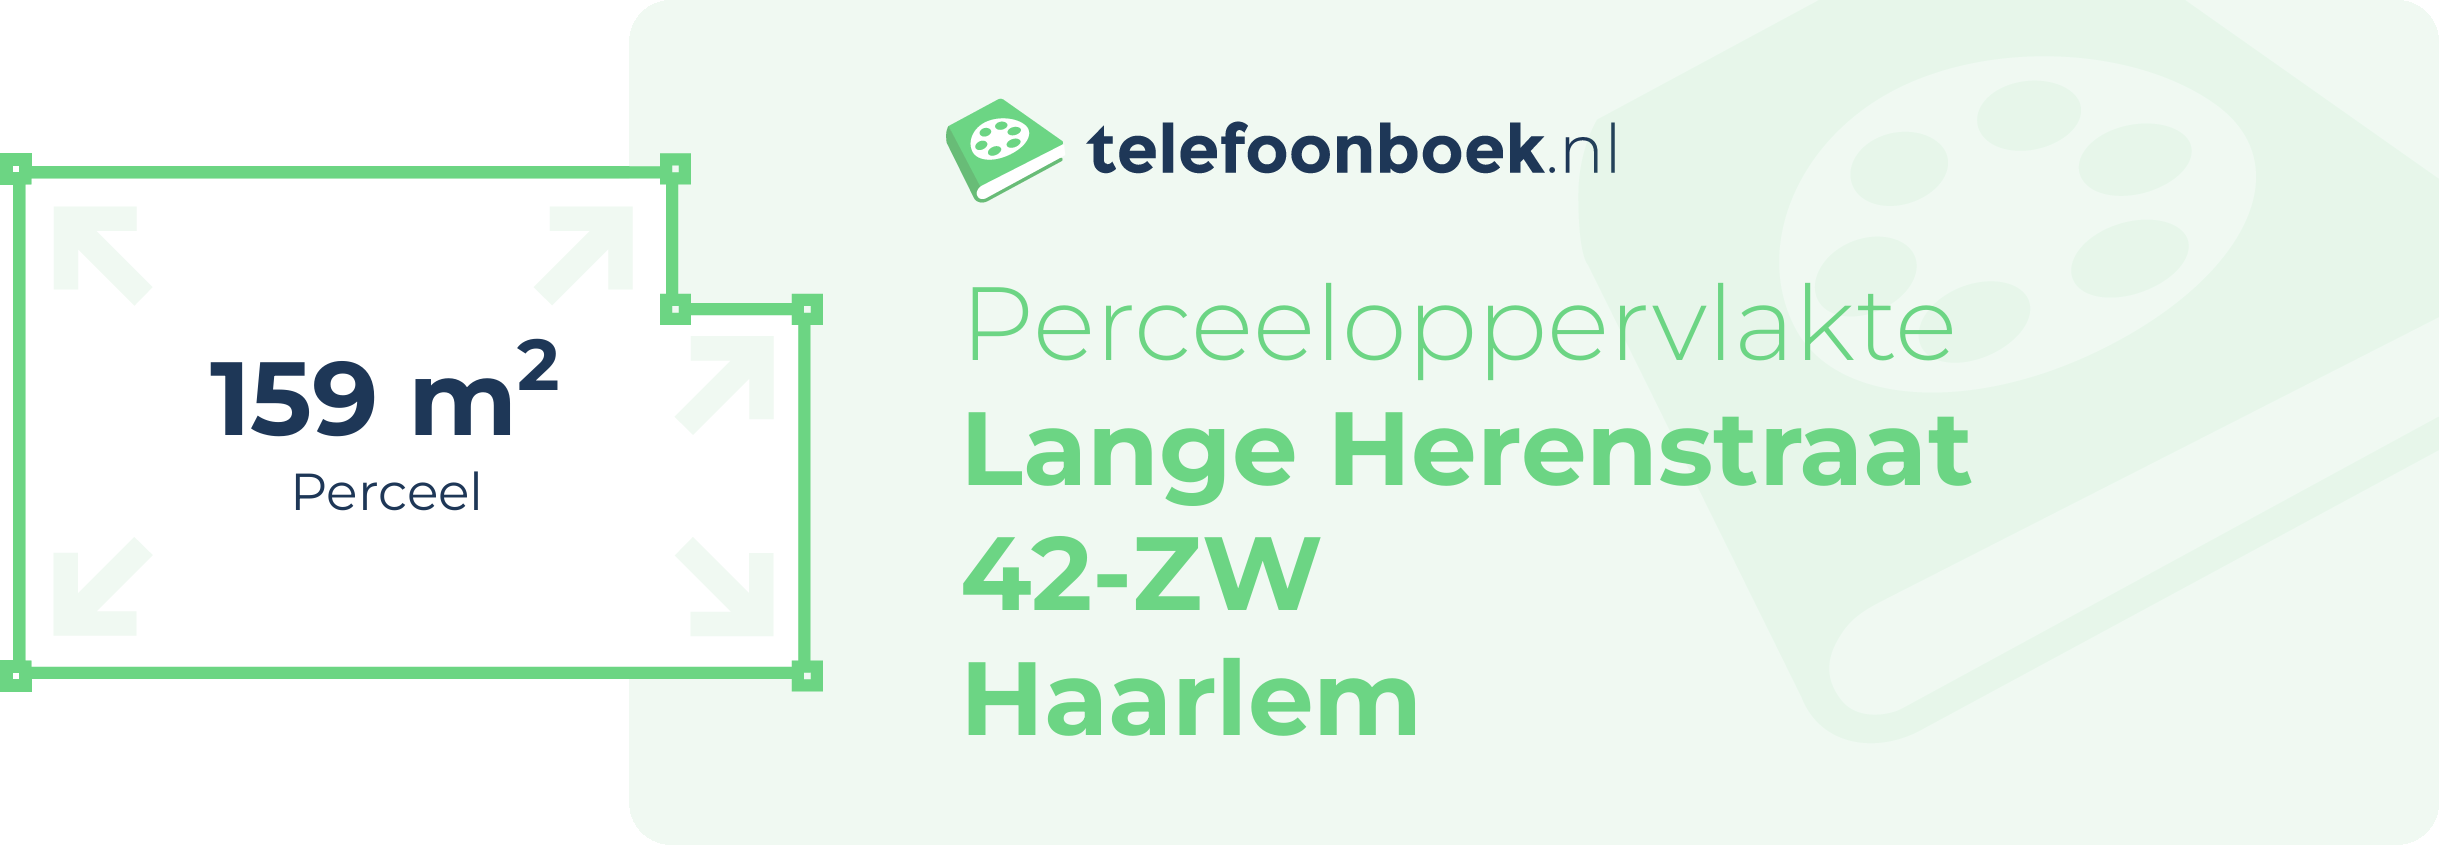 Perceeloppervlakte Lange Herenstraat 42-ZW Haarlem